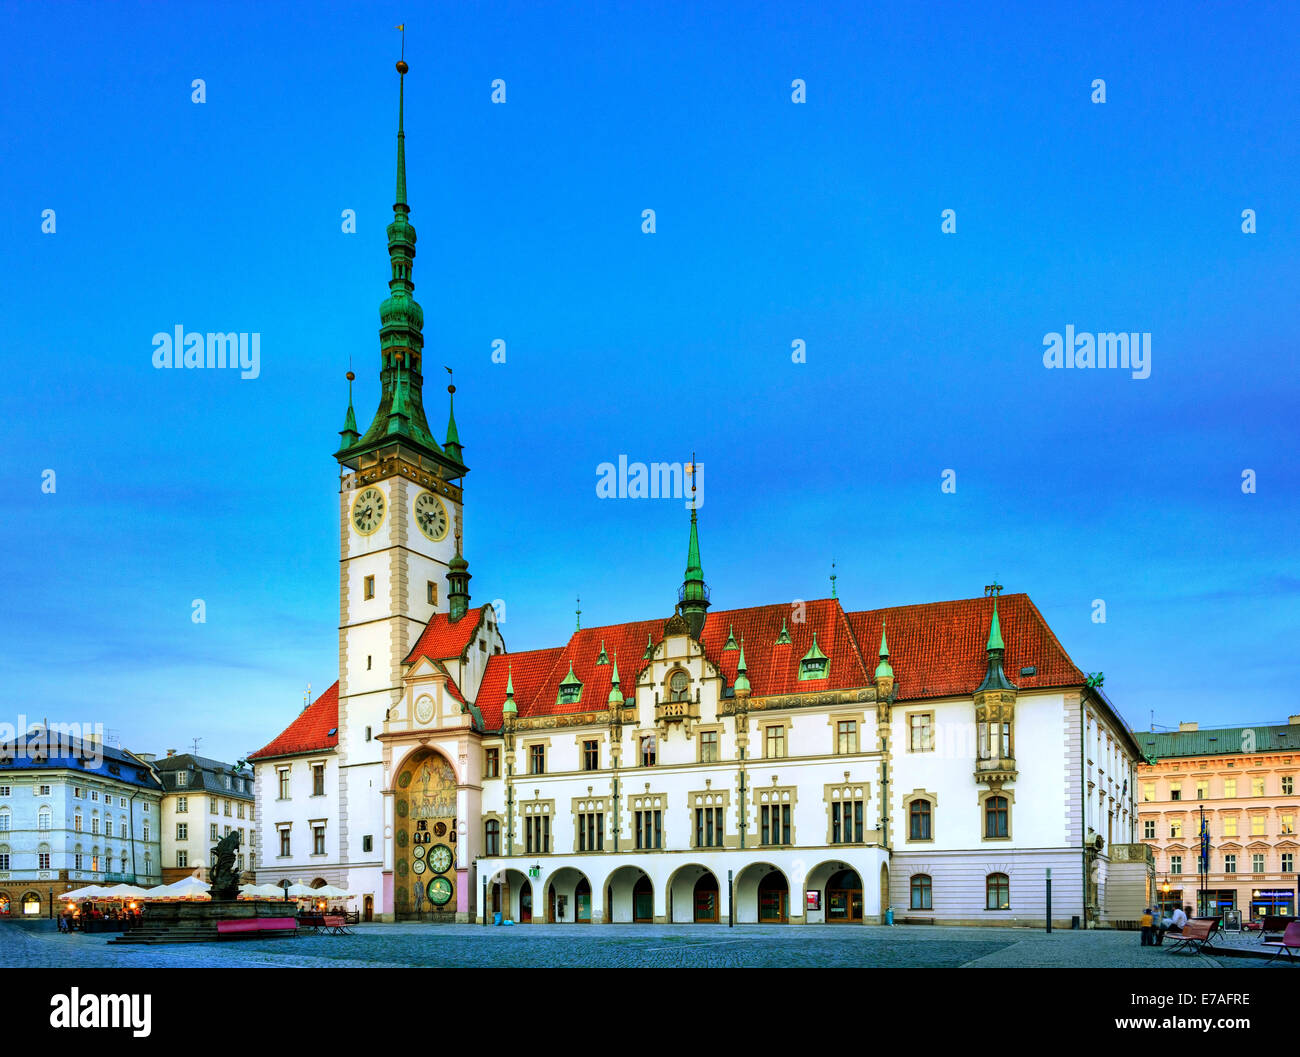 Olomouc City Hall with astronomical clock, Olomouc, Czech Republic Stock Photo